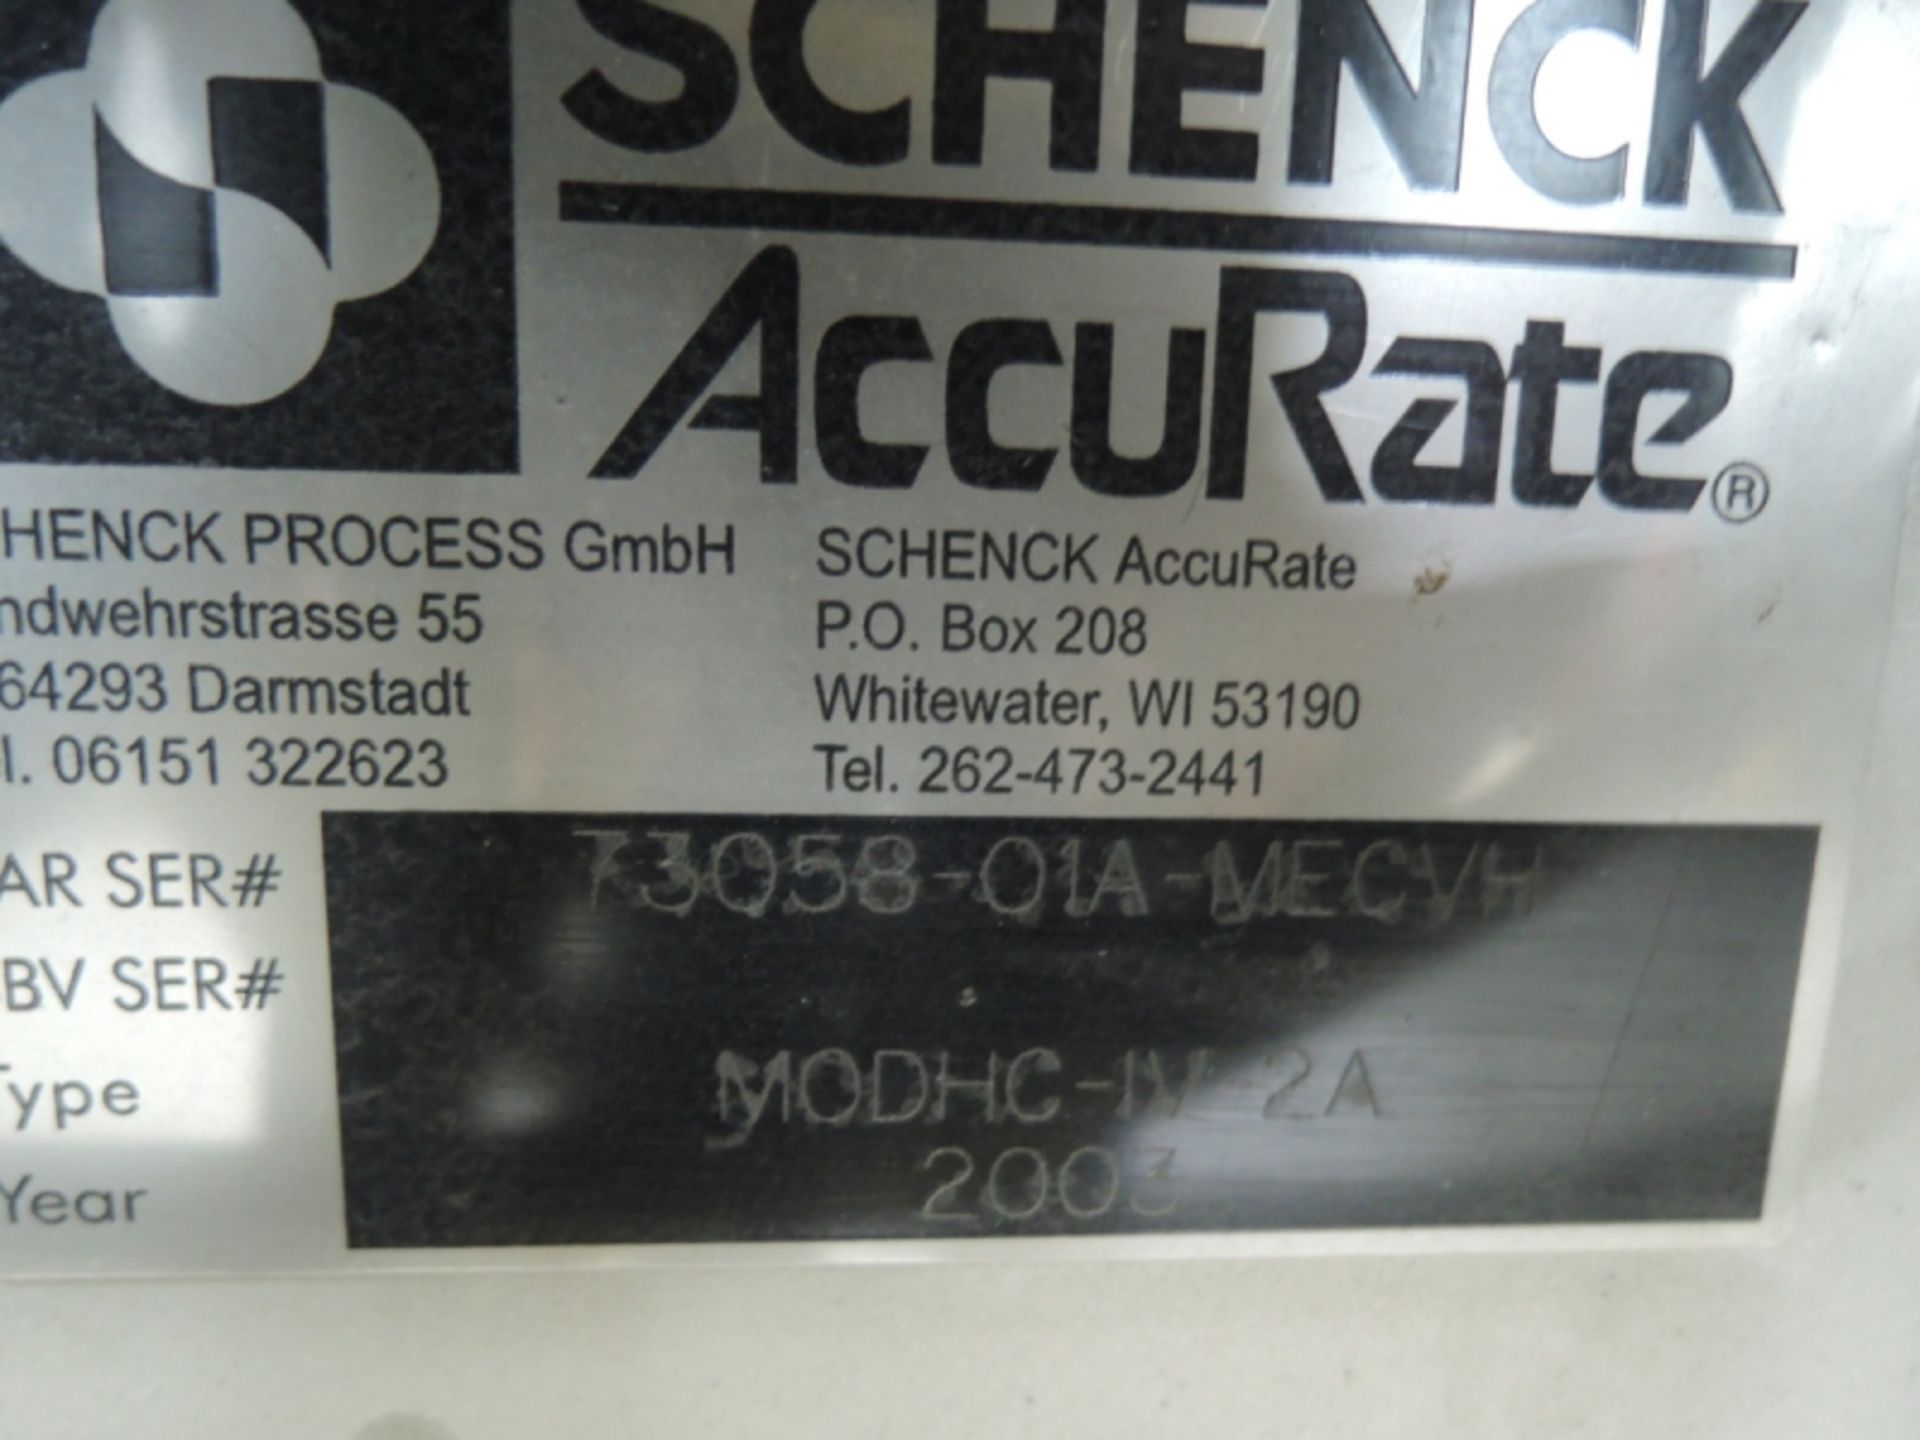 2003 SCHENCK ACCURATE MODEL MODHC-1V-2A SCREW TYPE HIGH RANGE VOLUMETRIC ADDITIVE FEEDER S/N 73058- - Image 4 of 7